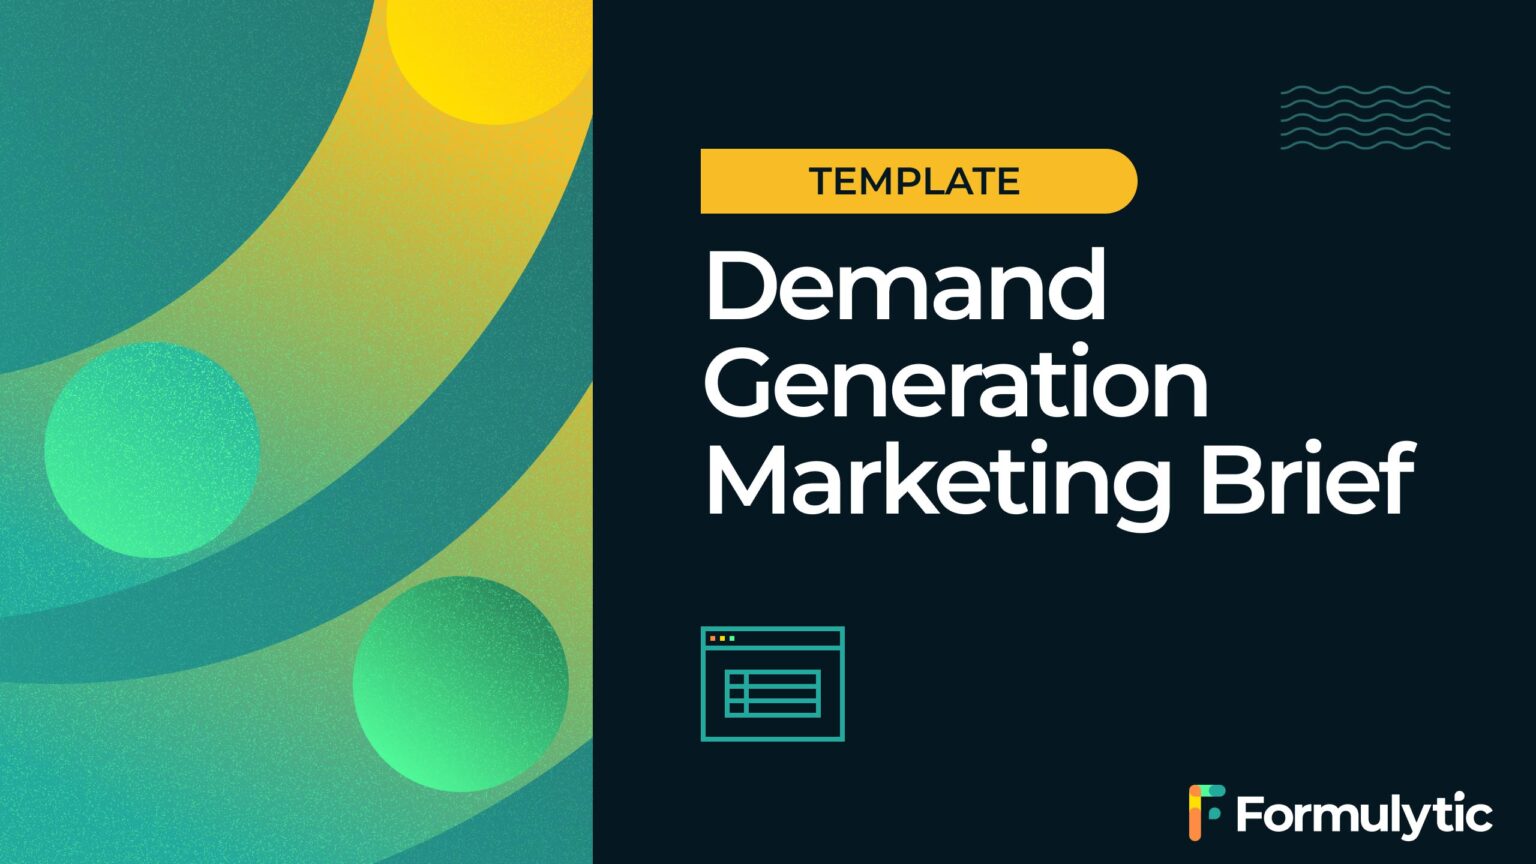 Demand Generation Marketing Campaign Brief Template